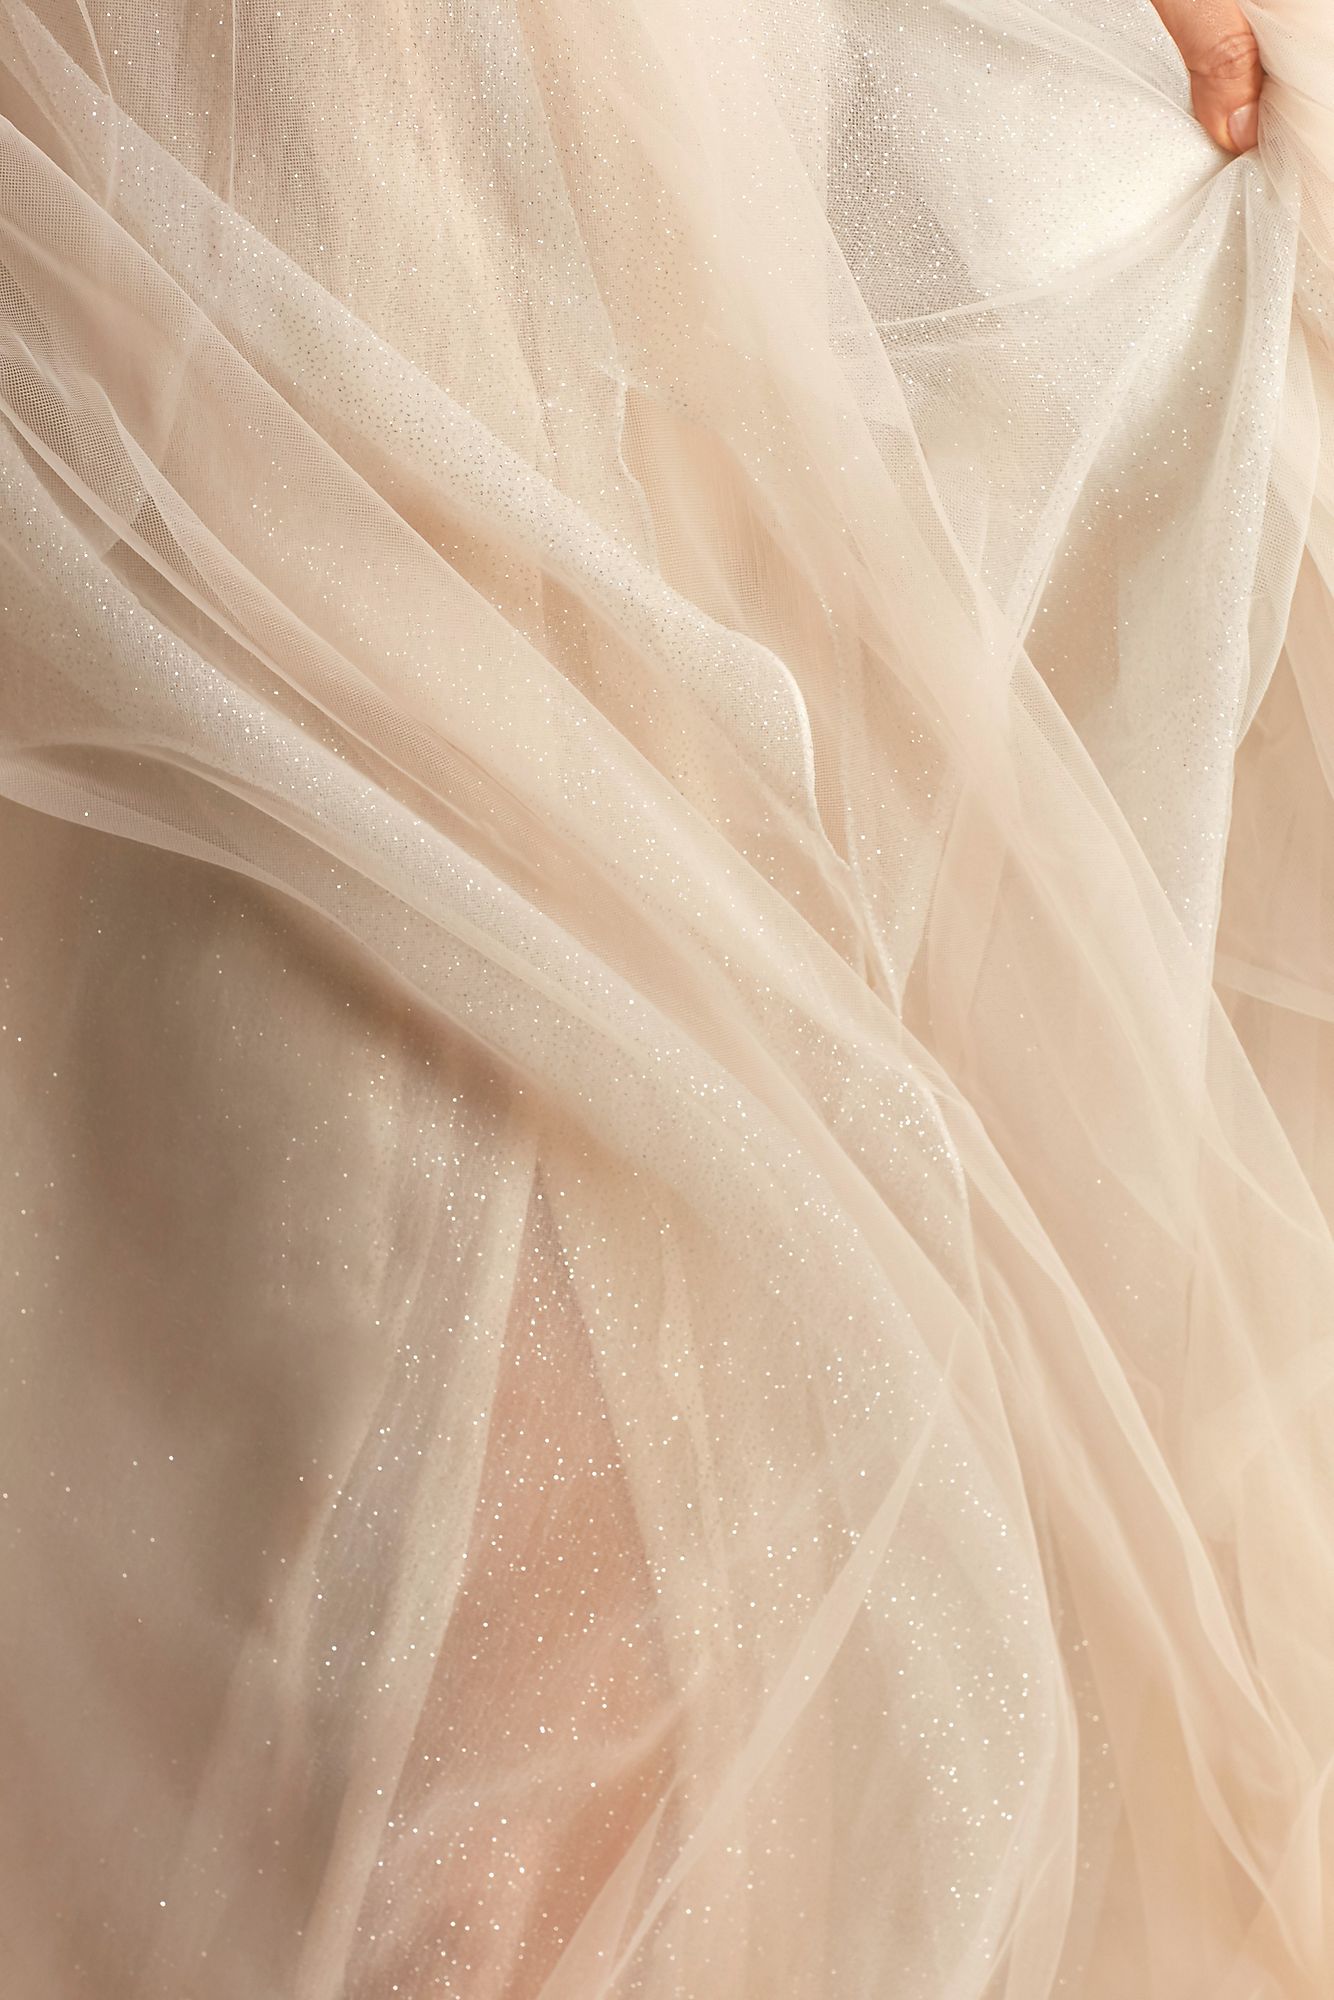 Cap Sleeve Lace Appliqued Petite Wedding Dress 7SWG862